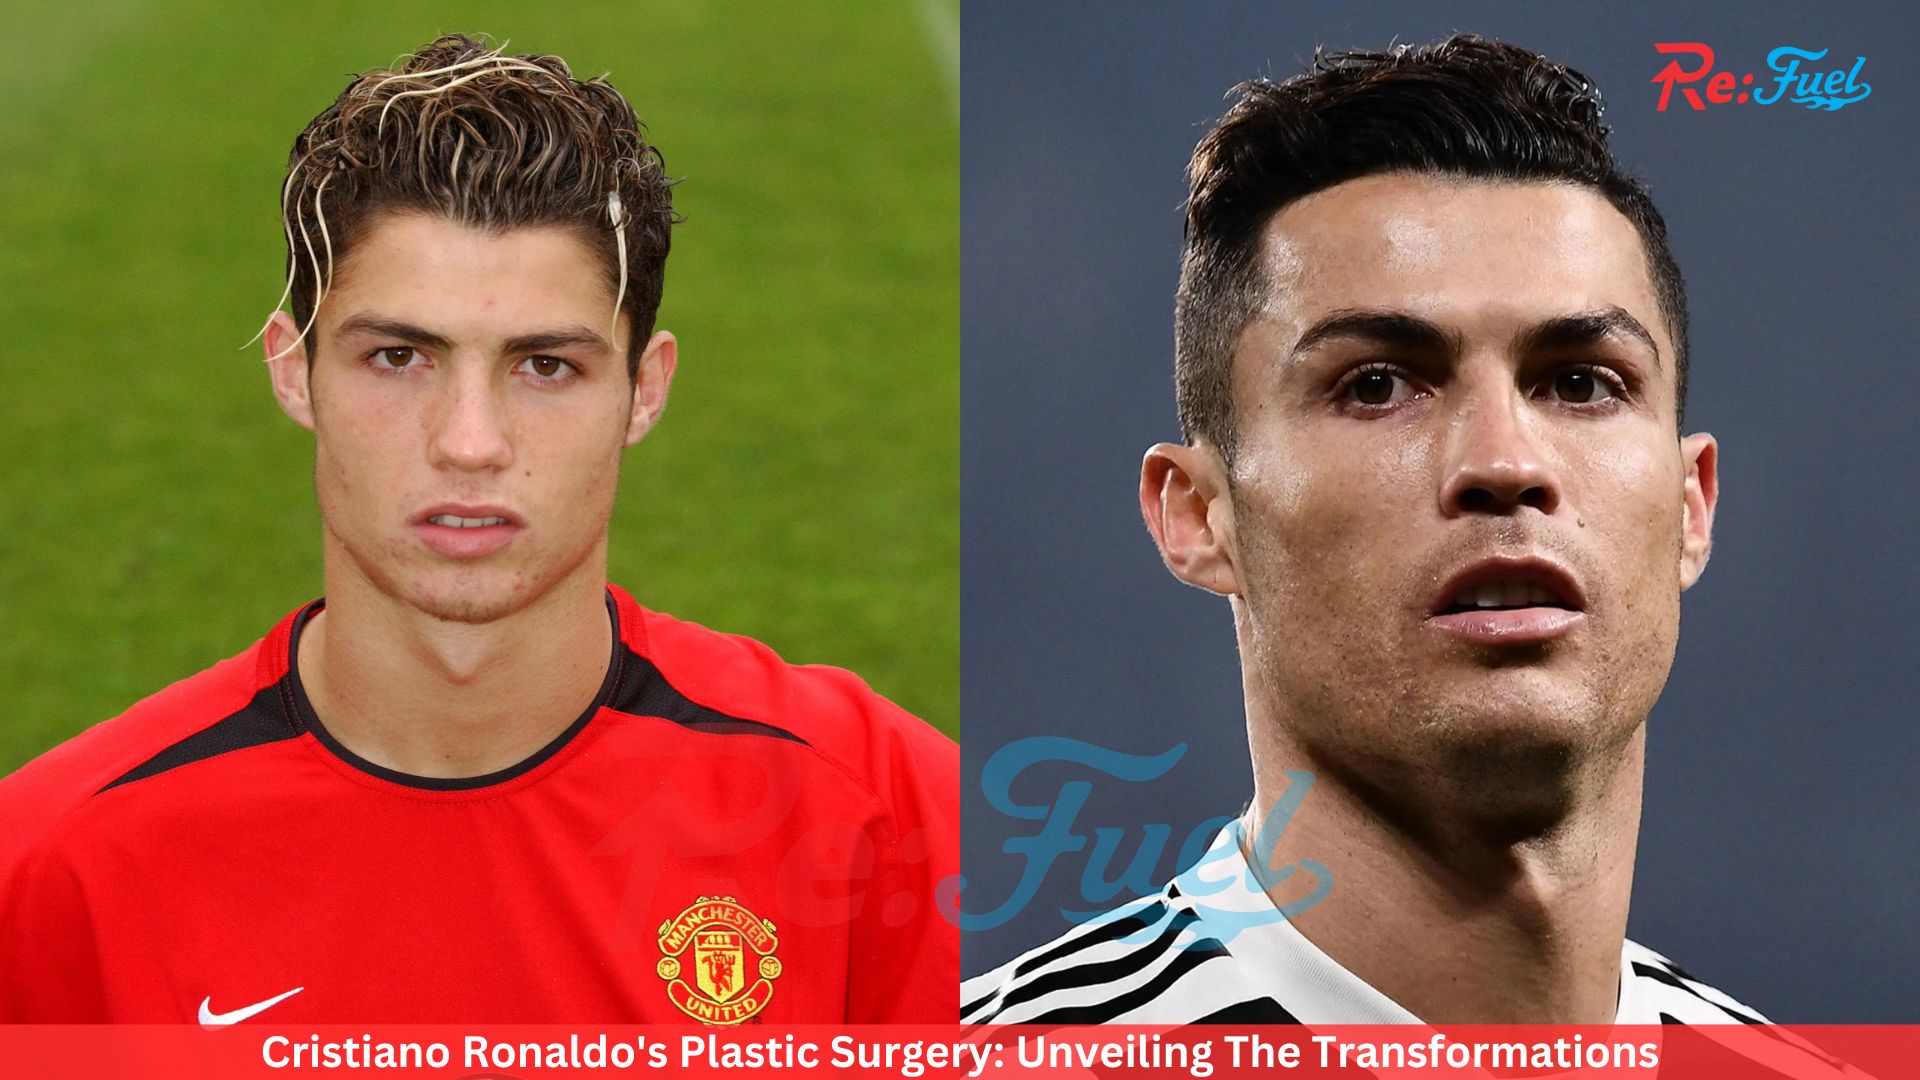 Cristiano Ronaldo's Plastic Surgery: Unveiling The Transformations